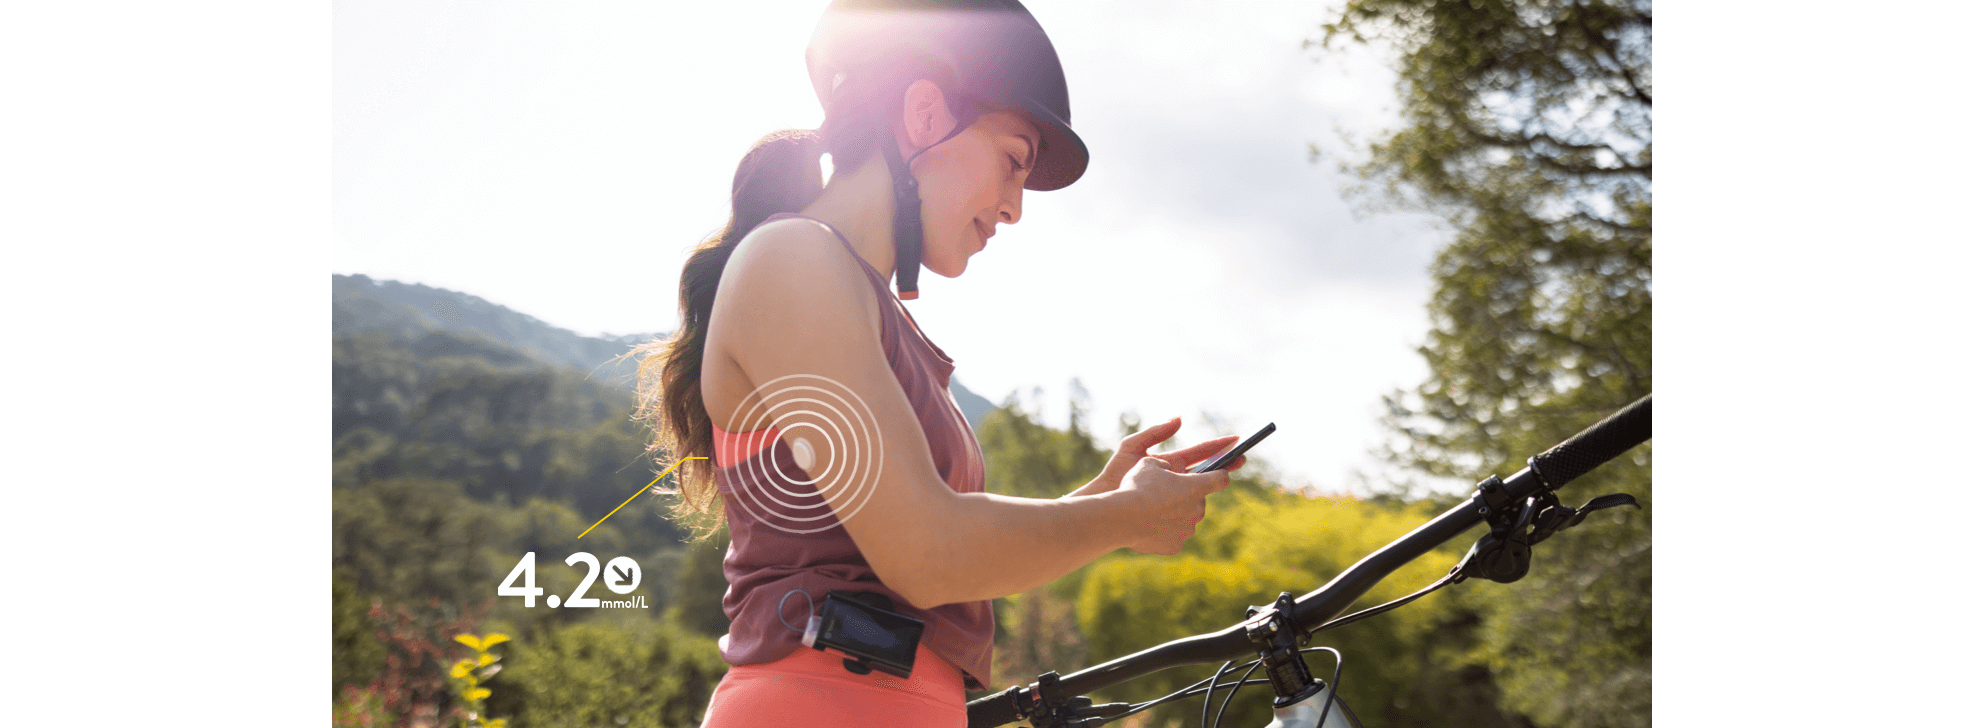 Biker with sensor looking at her phone